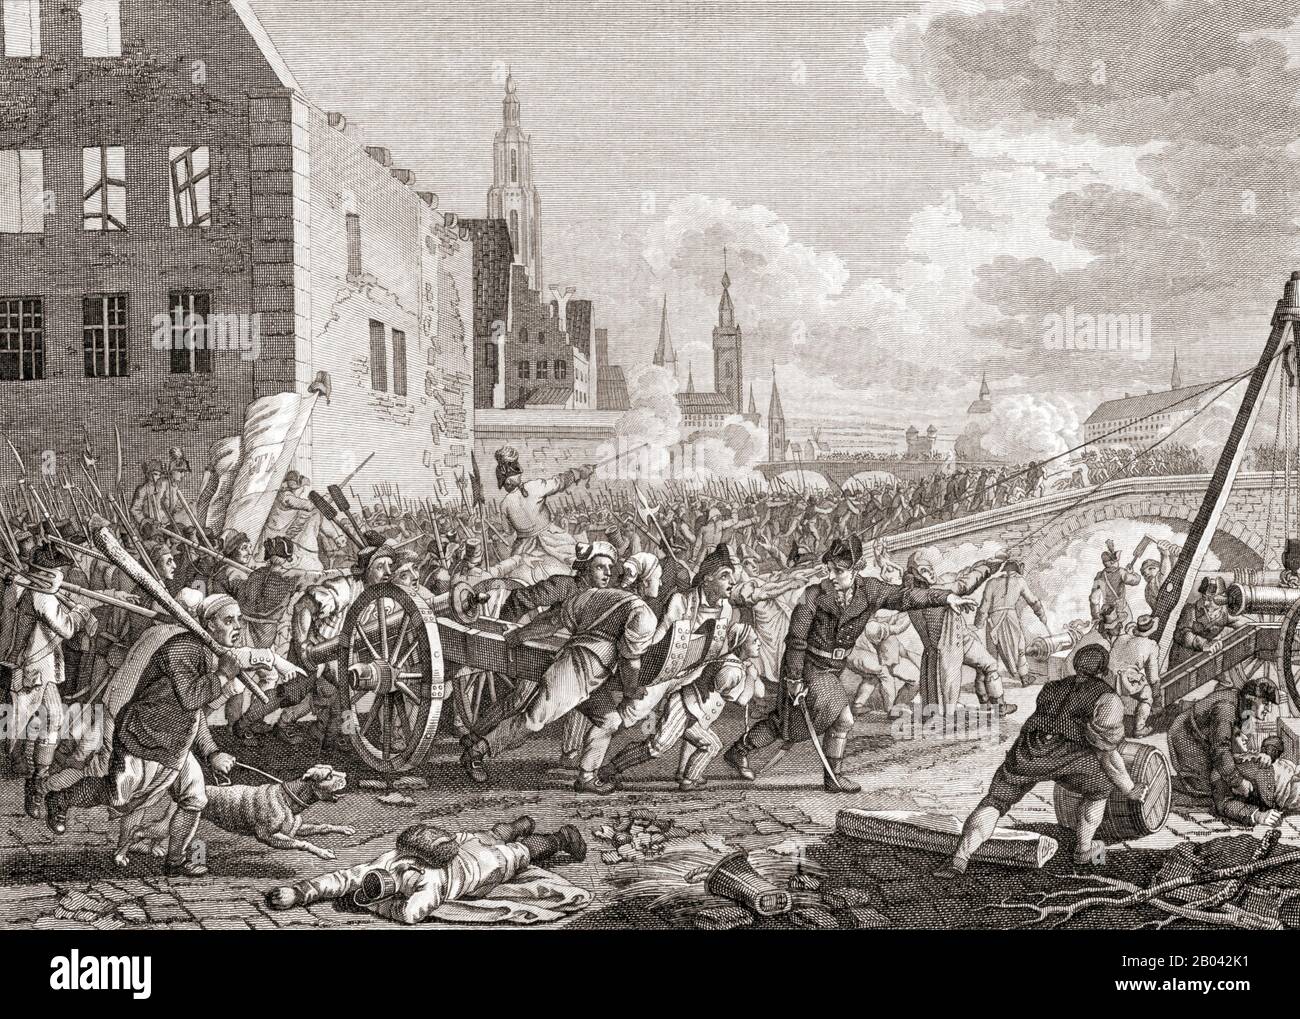 Outbreak of the revolt in Brabant, Austrian Netherlands (modern day Belgium) against the Austrian authority of Emperor Joseph II in 1789. Stock Photo